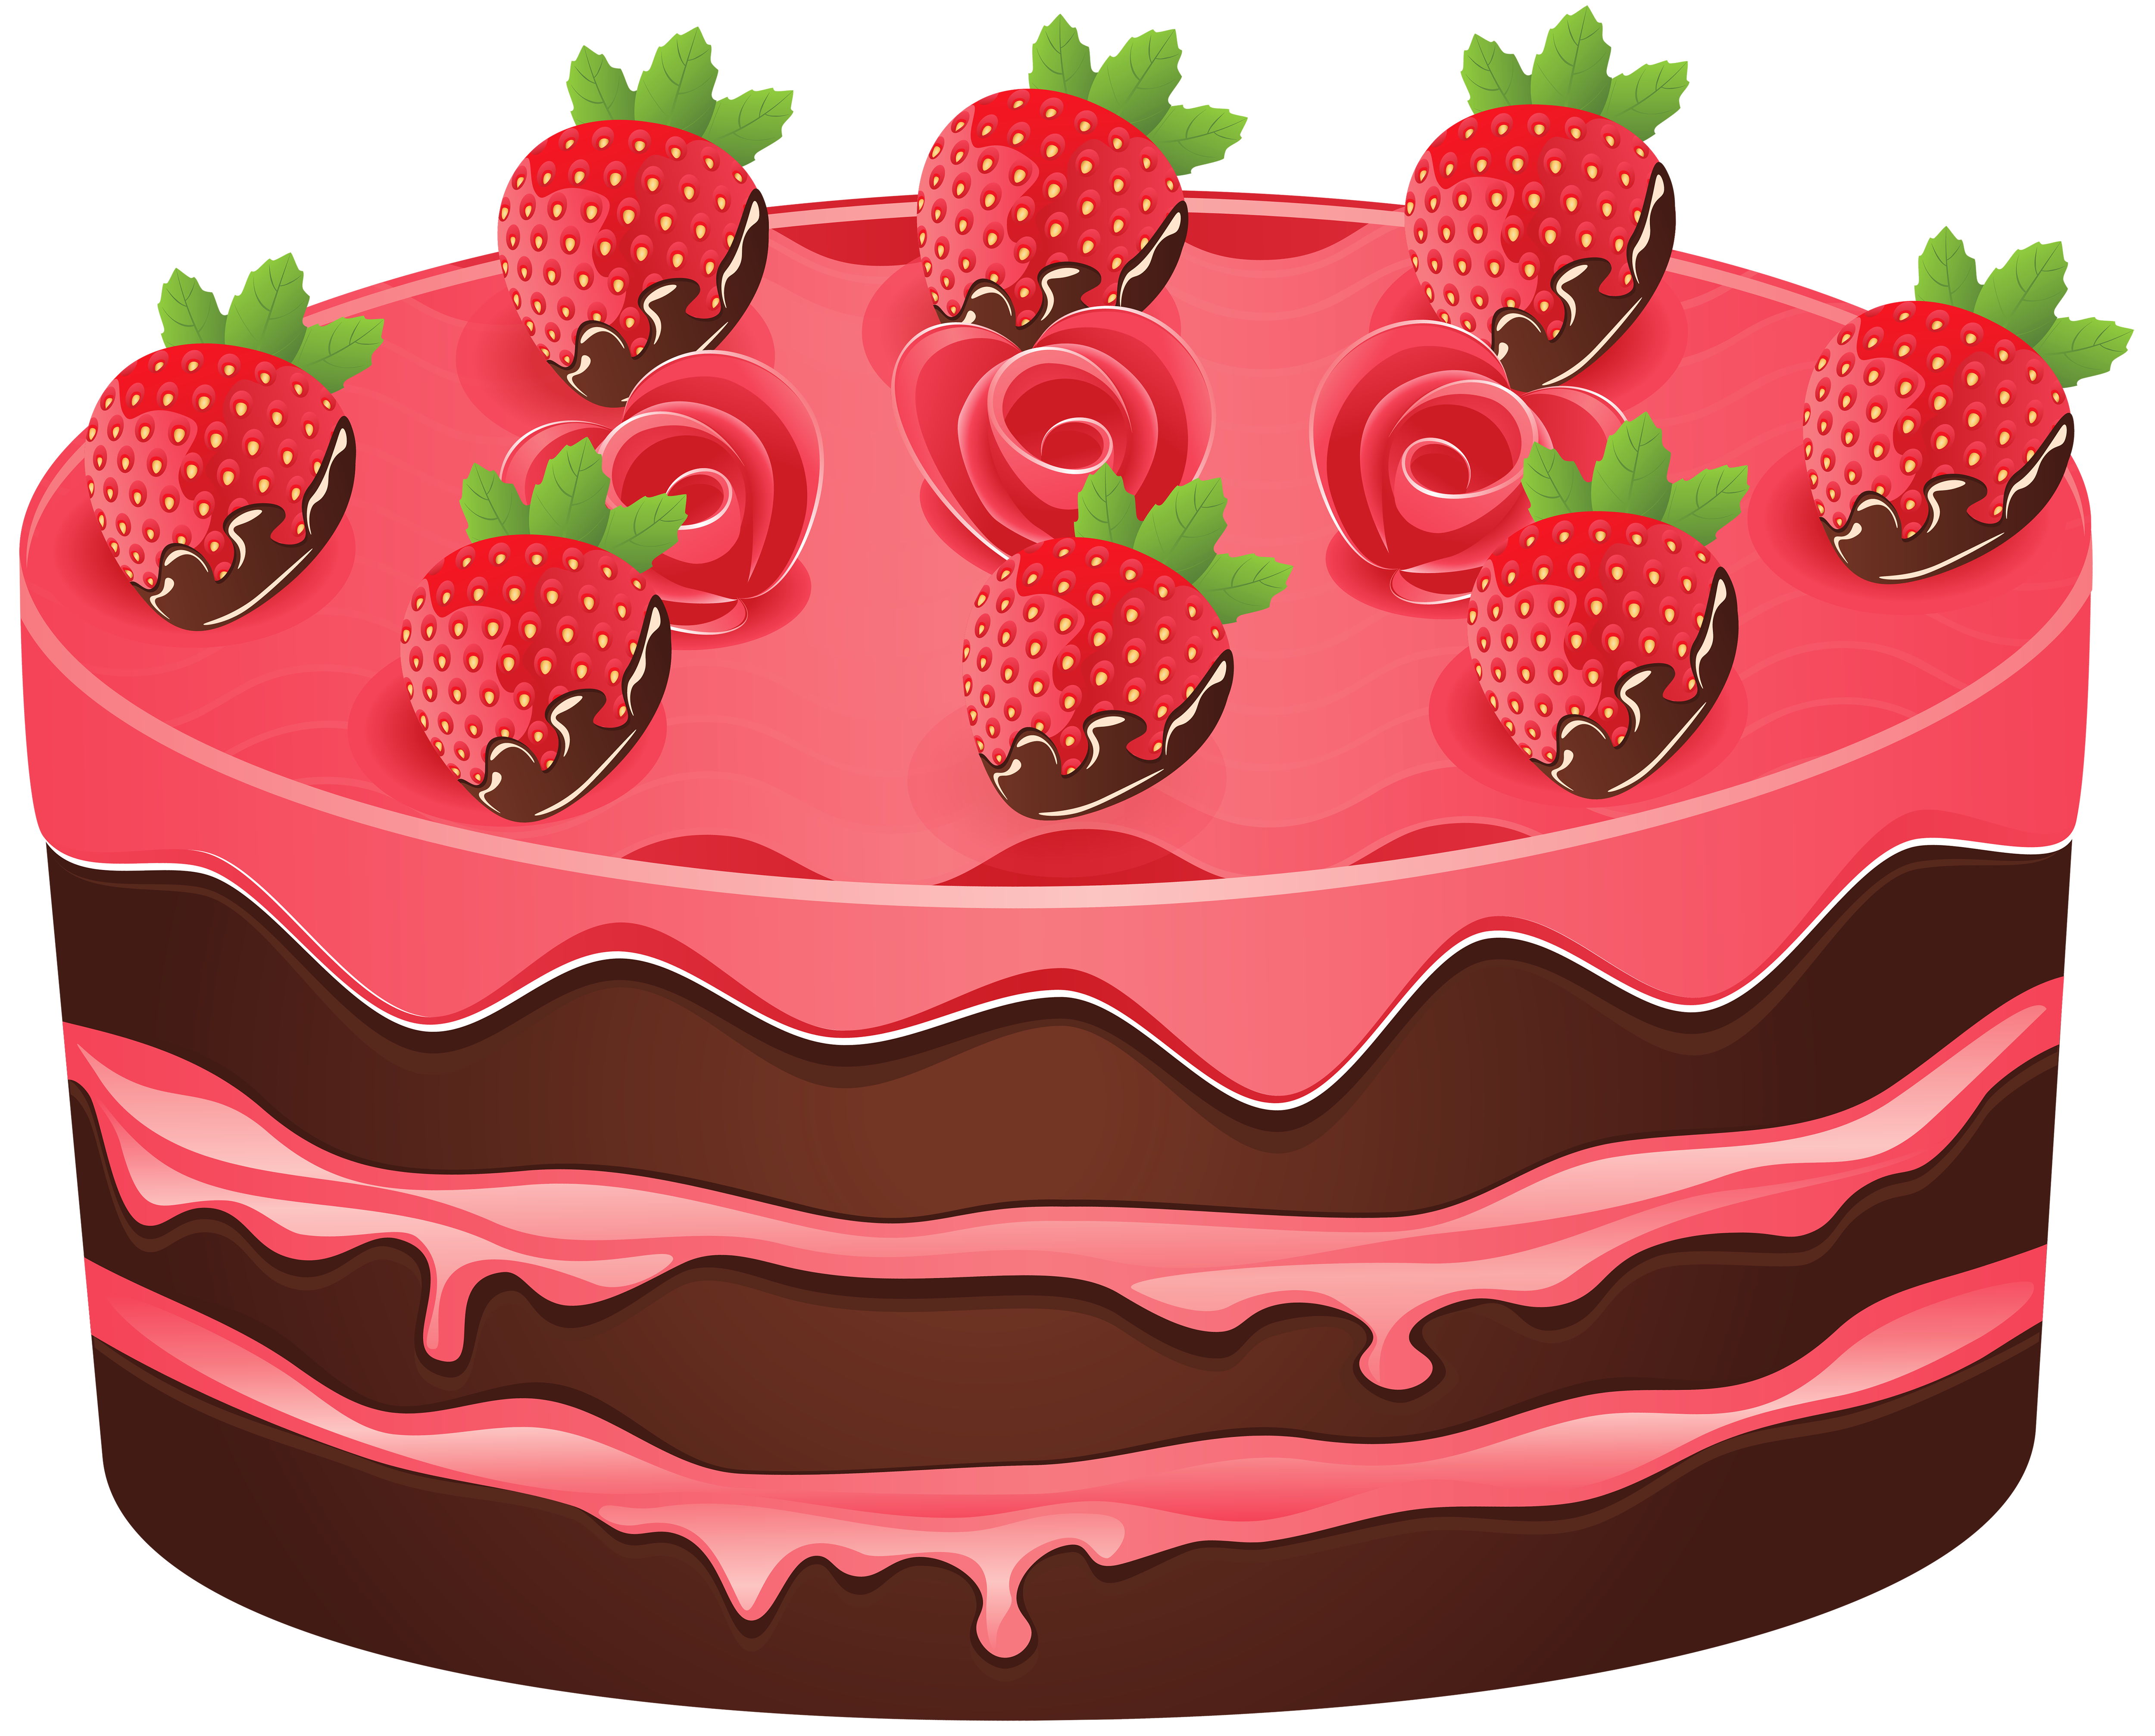 Birthday cake clip art free b